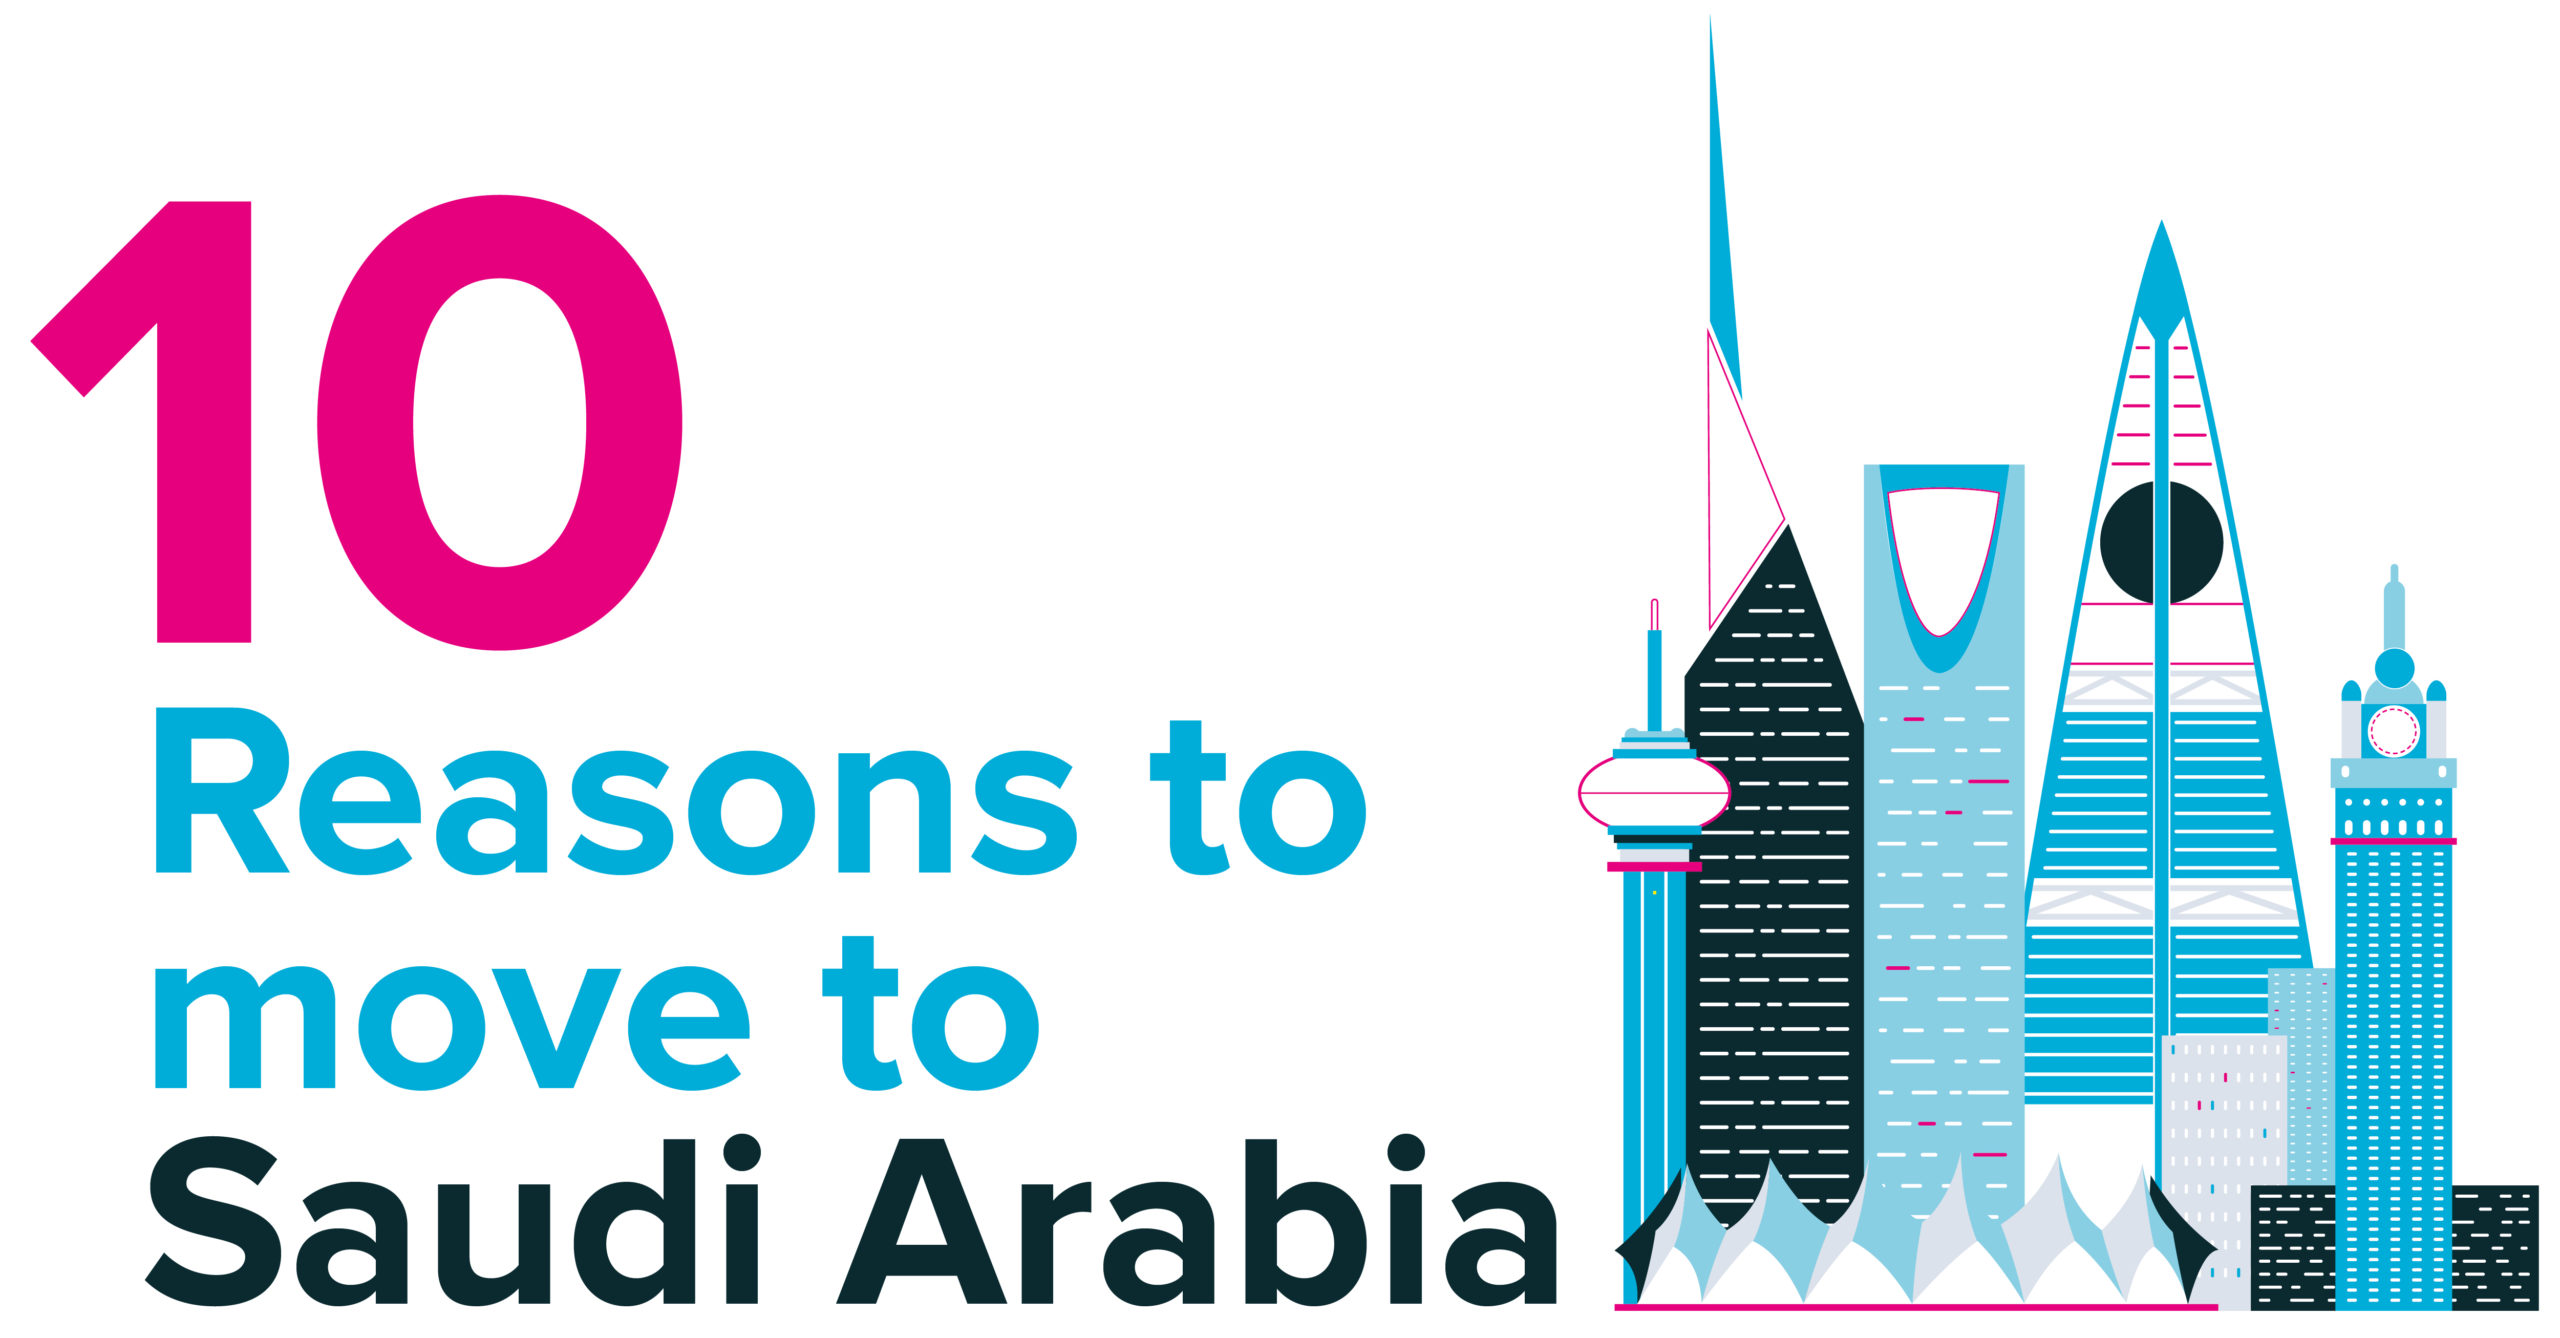 10 reasons to move to Saudi Arabia